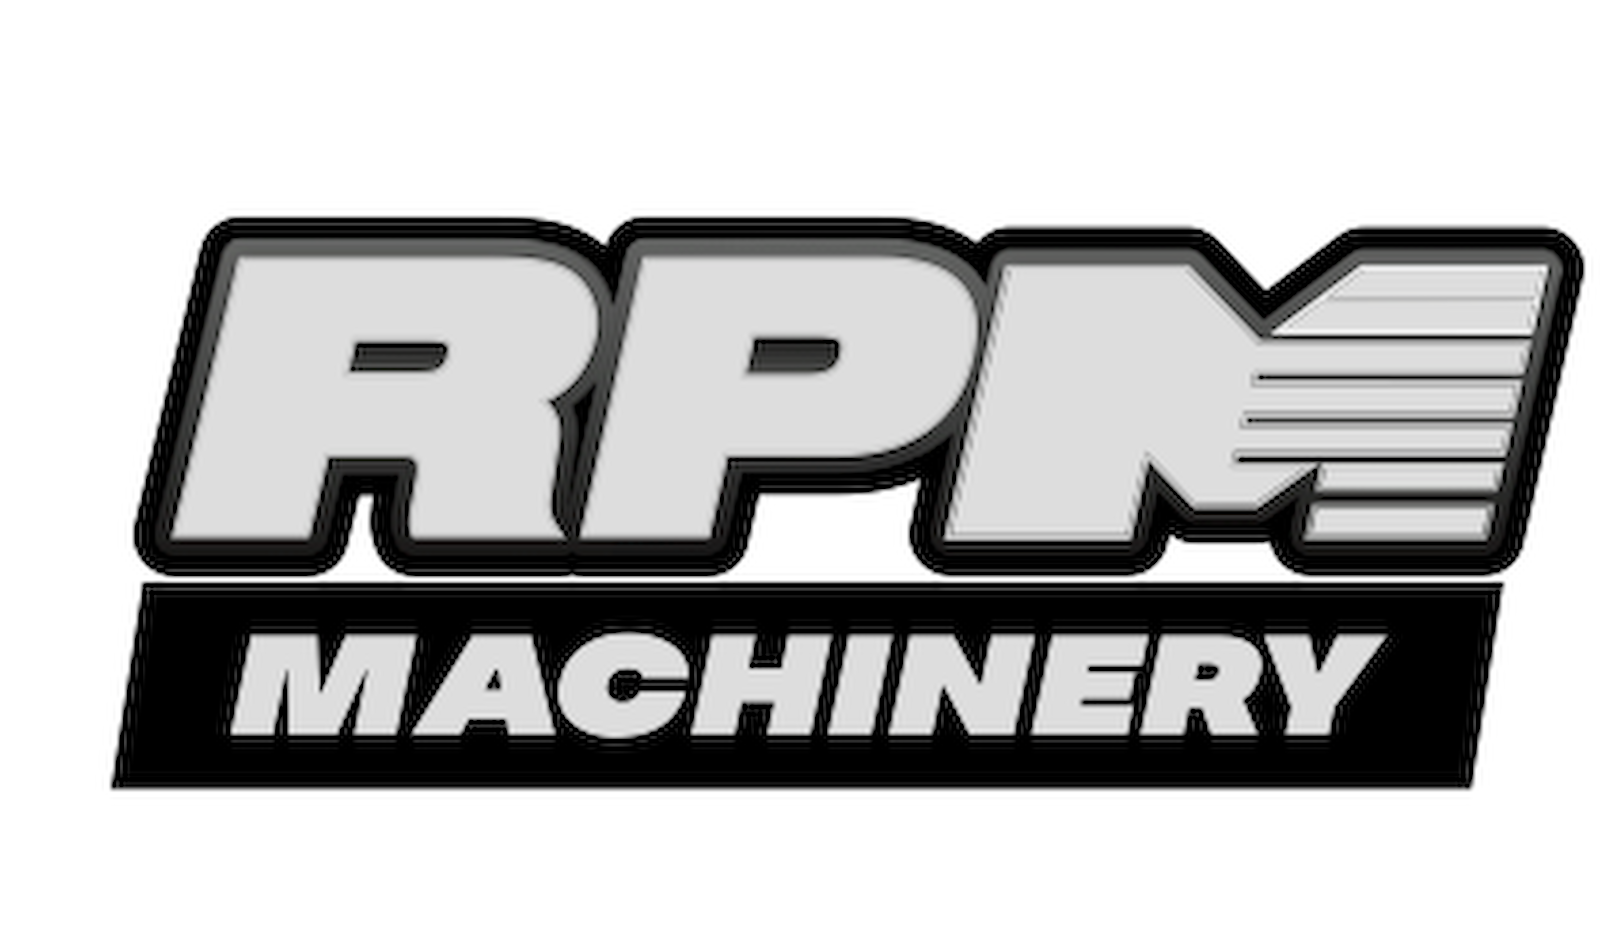 RPM Machinery